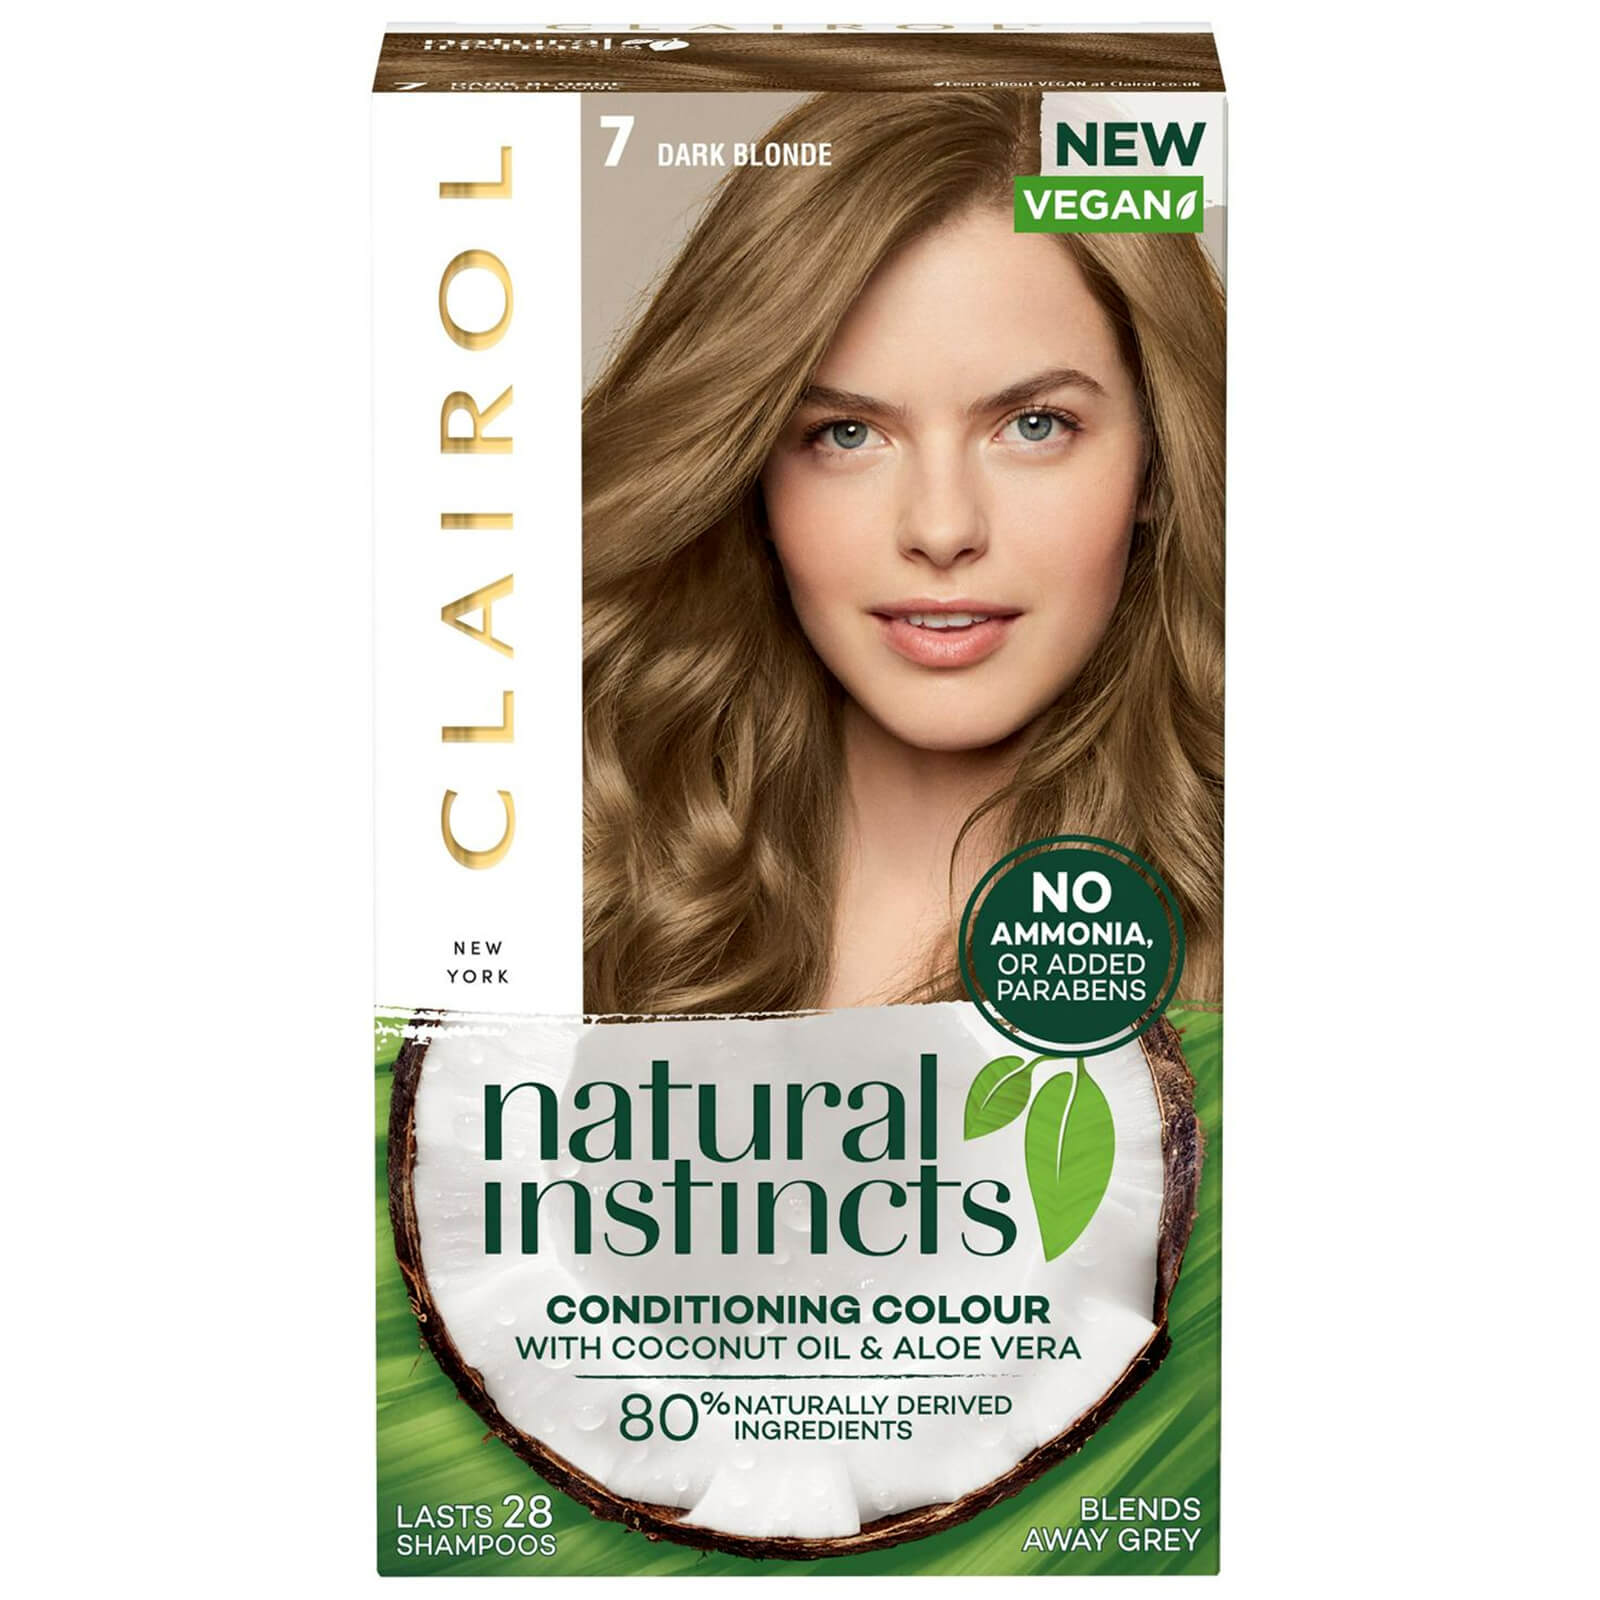 Clairol Natural Instincts Semi-Permanent No Ammonia Vegan Hair Dye 177ml (Various Shades) - 7 Dark Blonde